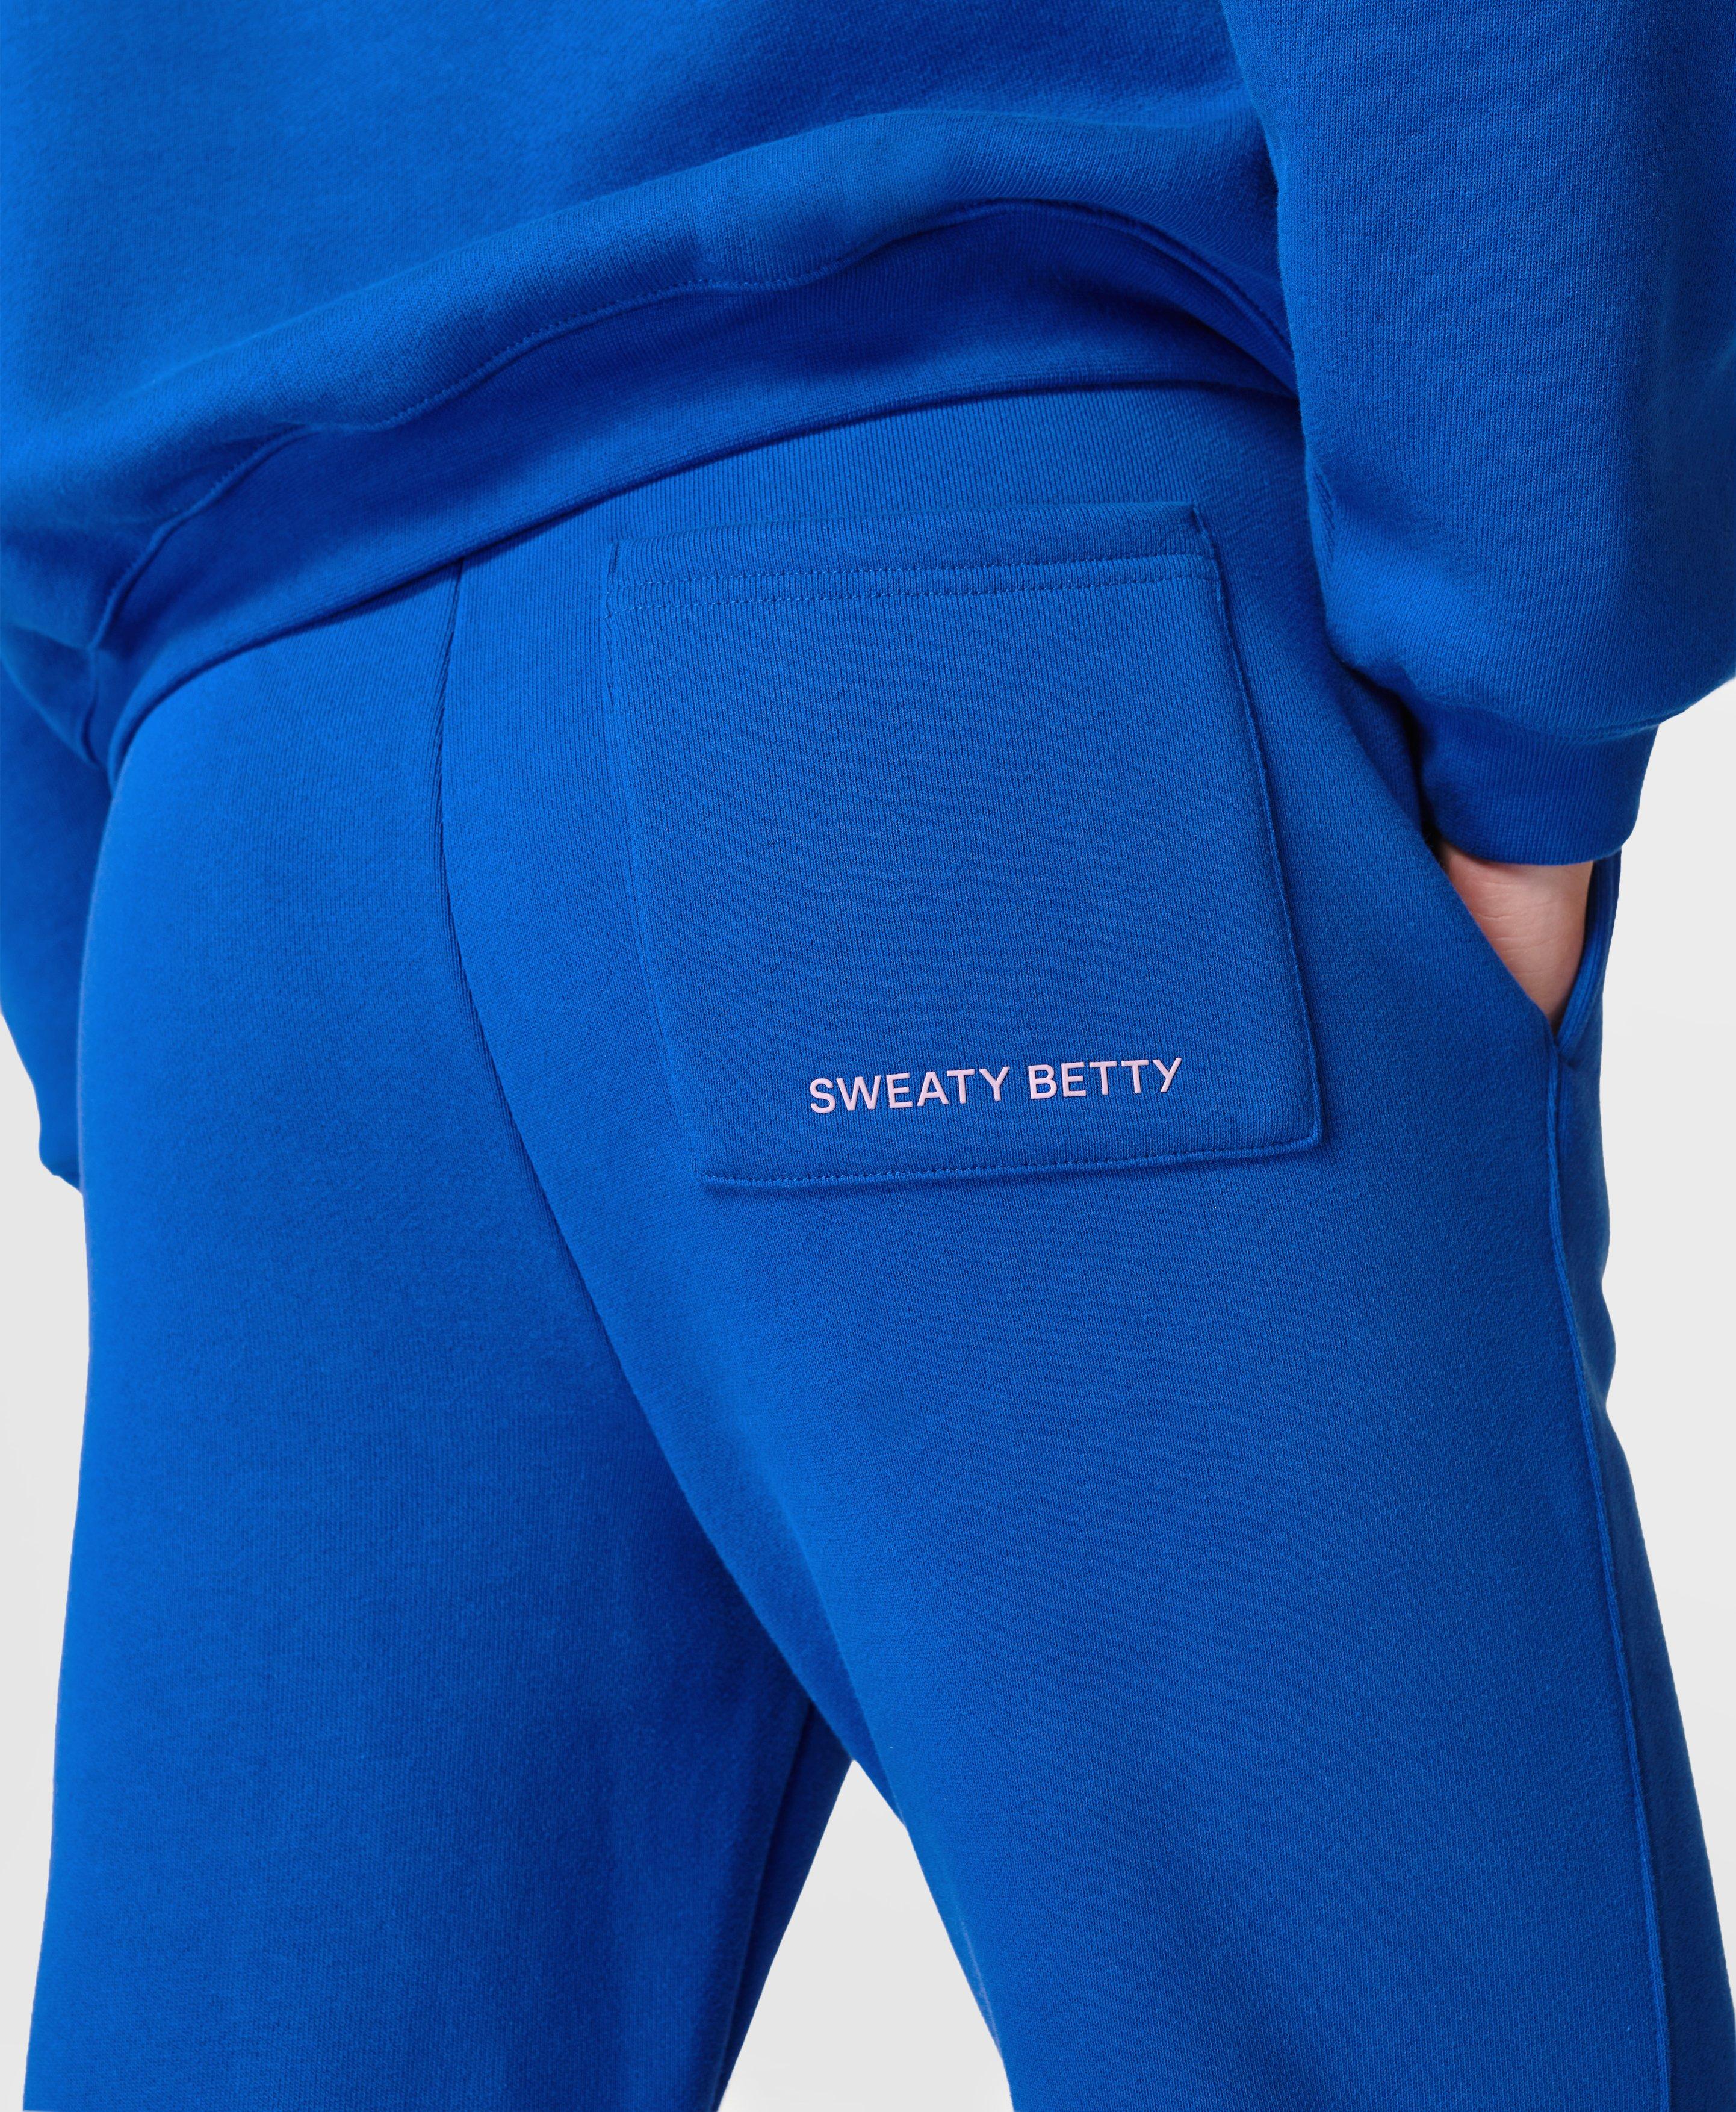 Sweaty Betty Yoga Picks